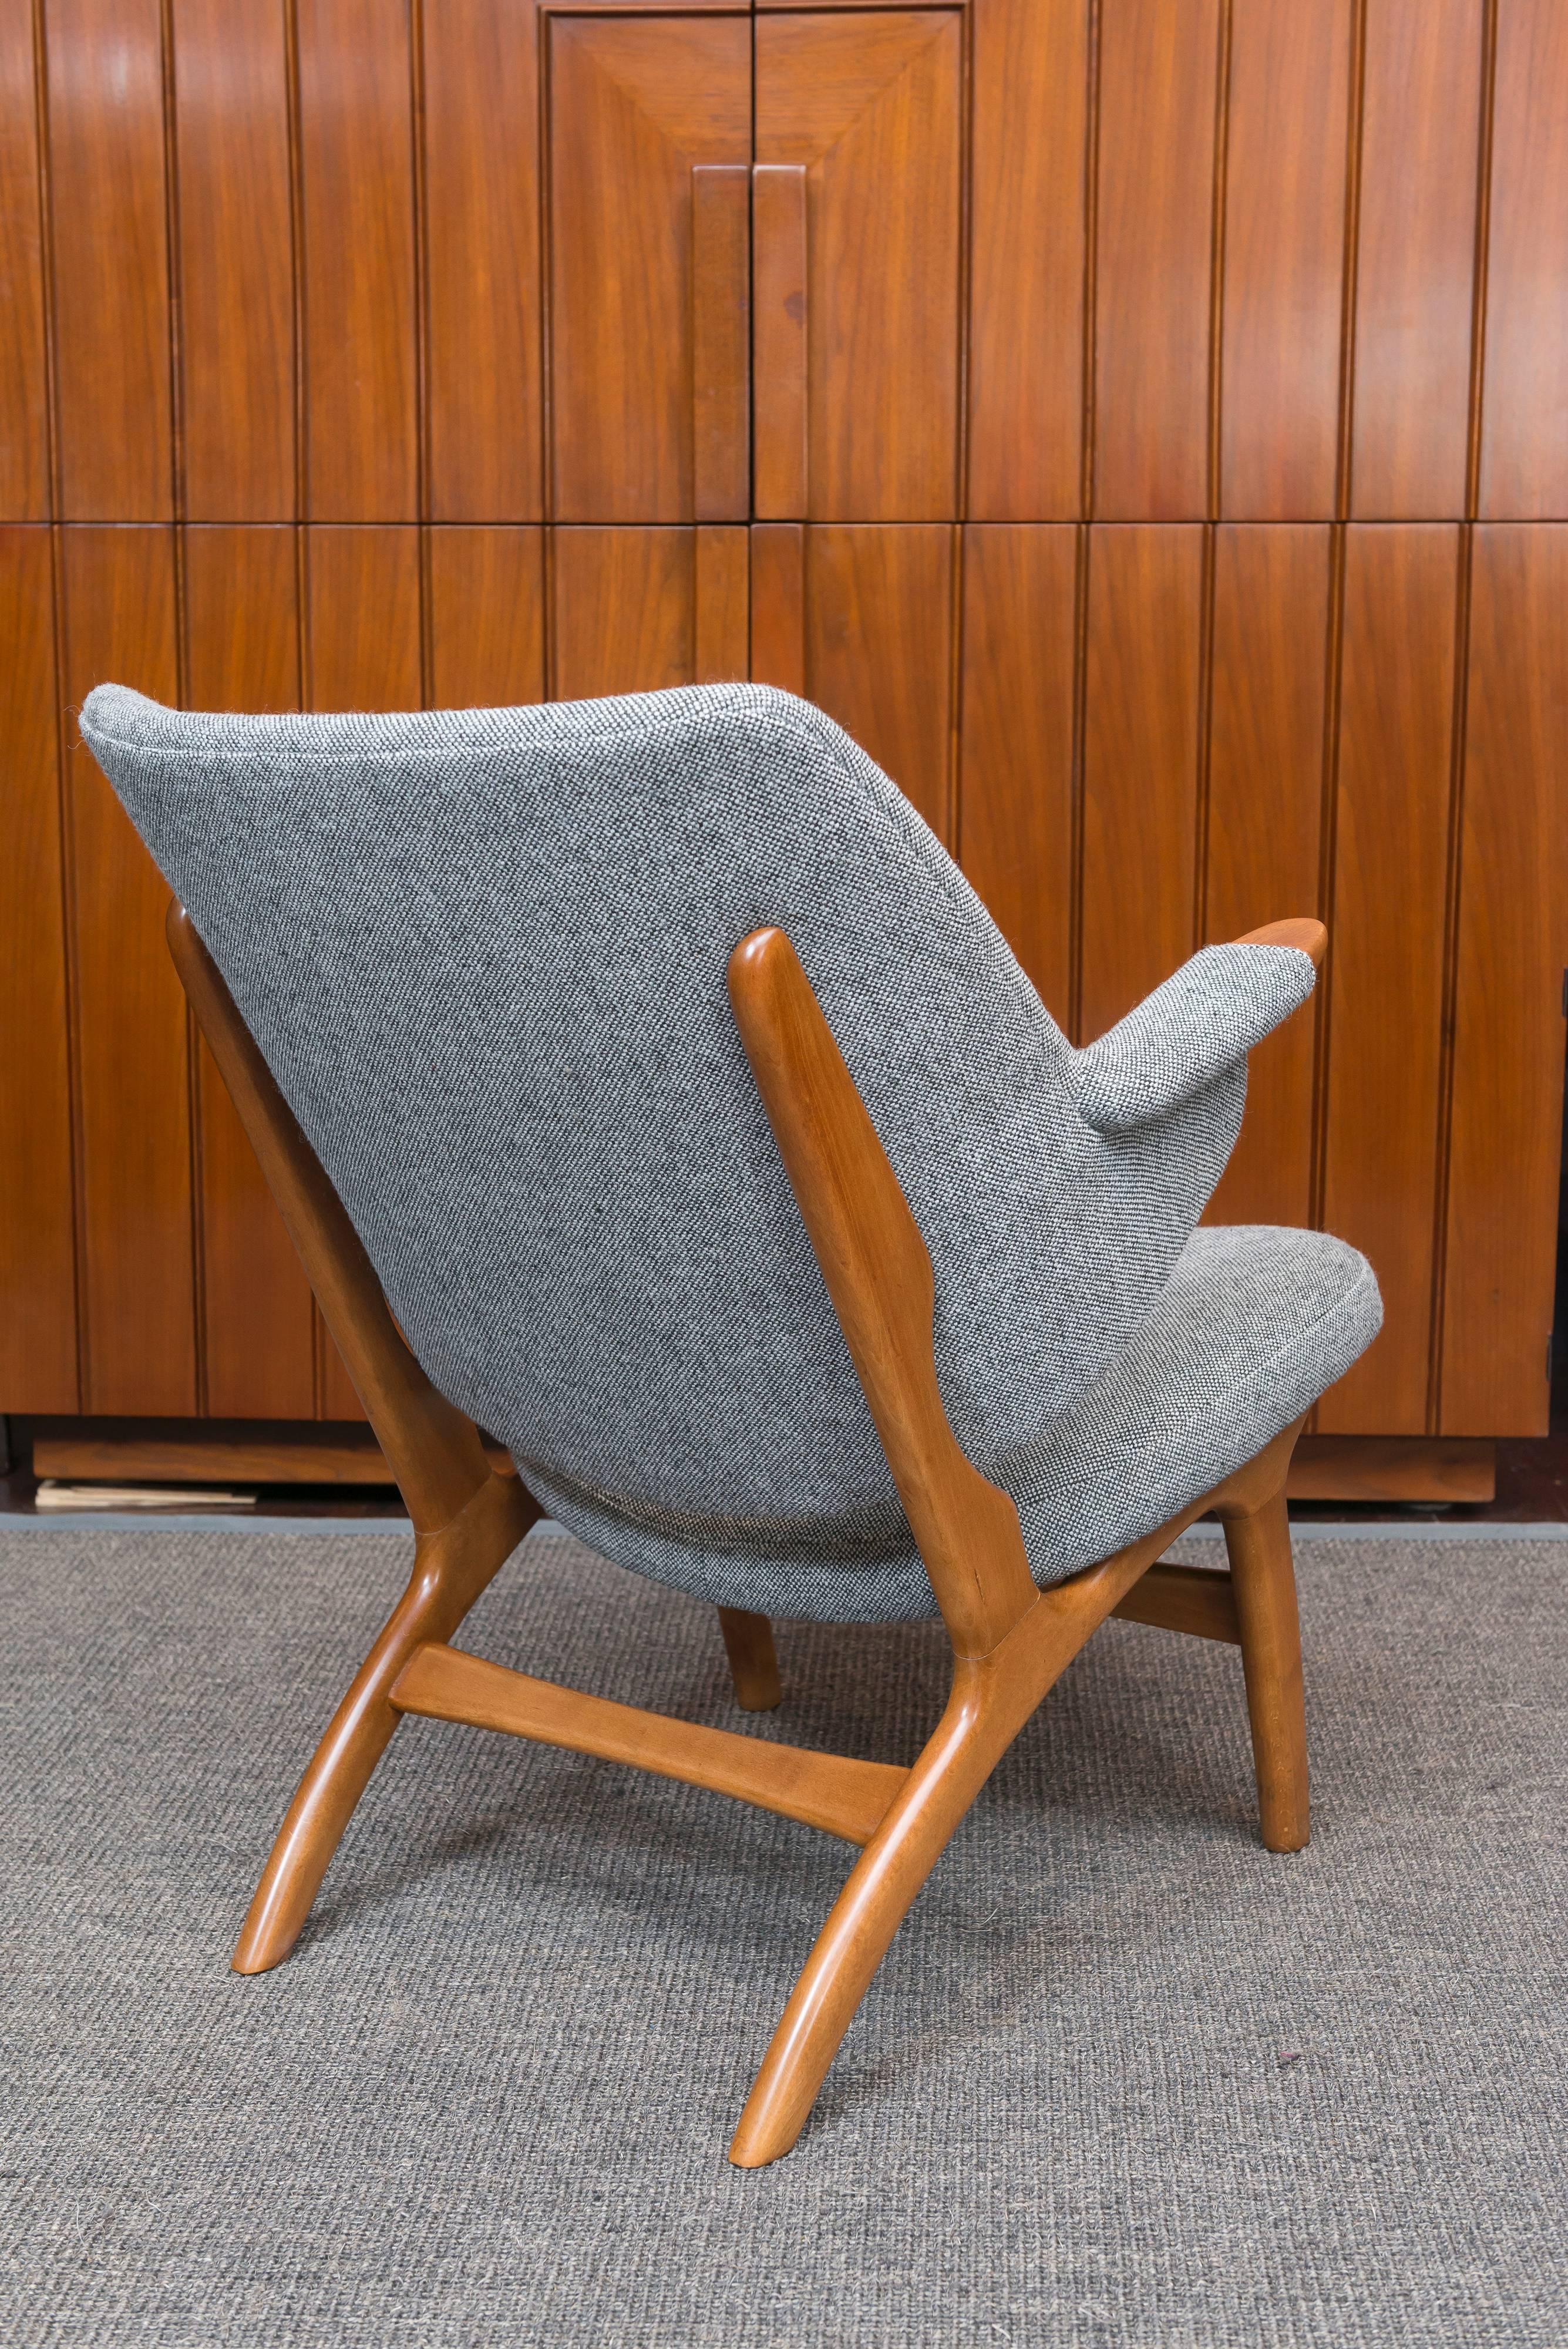 Mid-20th Century Scandinavian Modern Lounge Chair